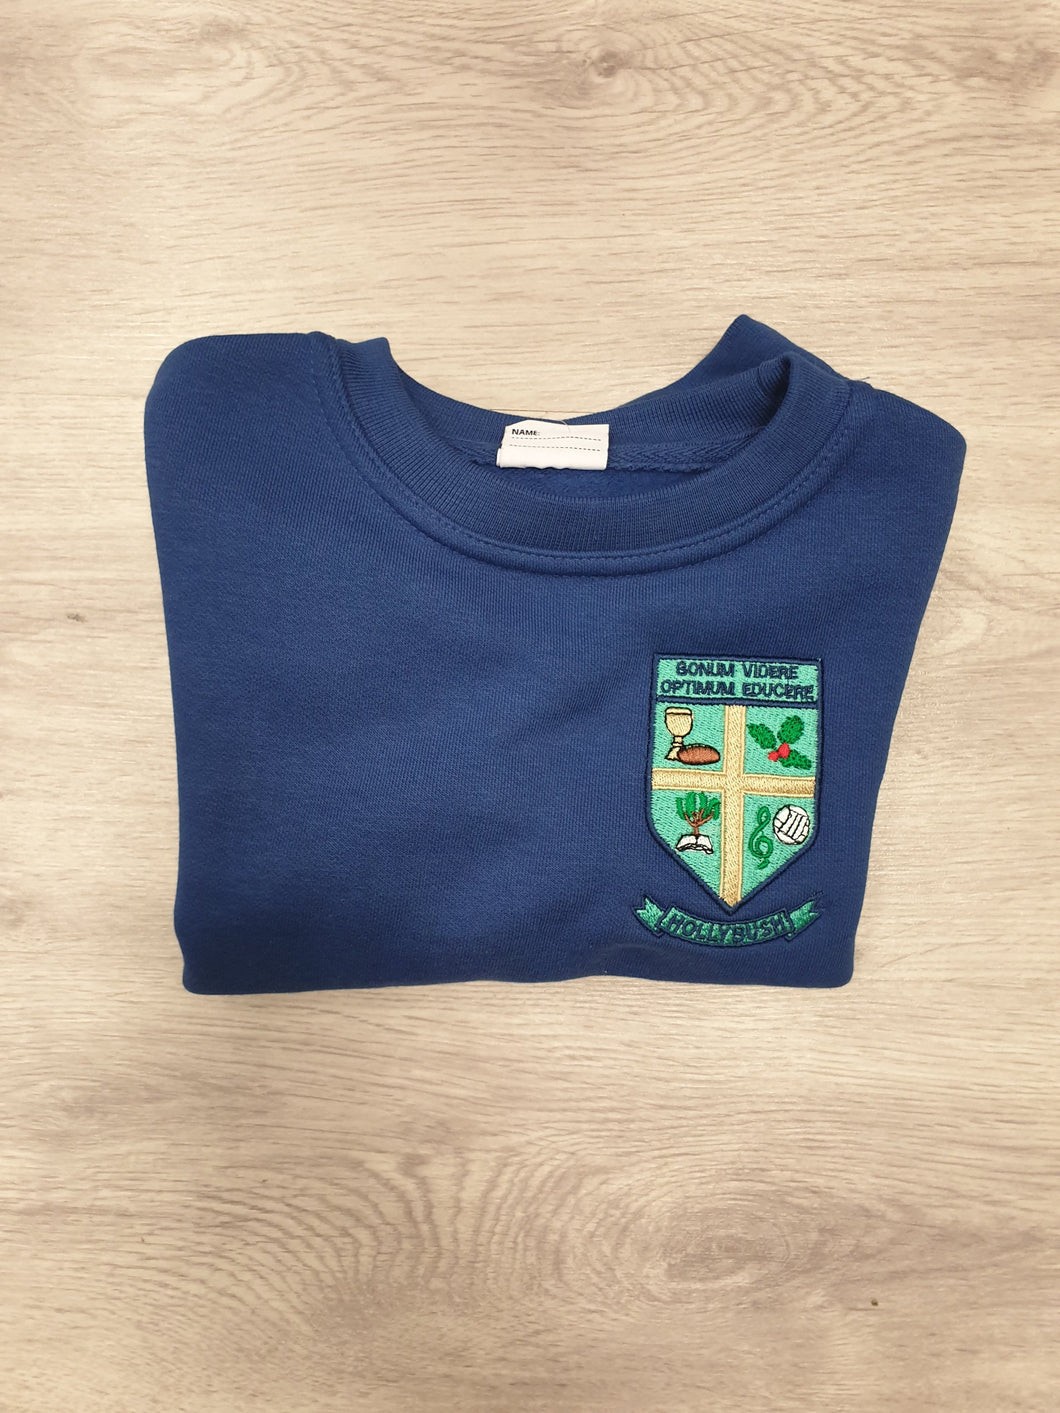 3 x Hollybush nursery royal blue sweatshirt (SAVE 19%)